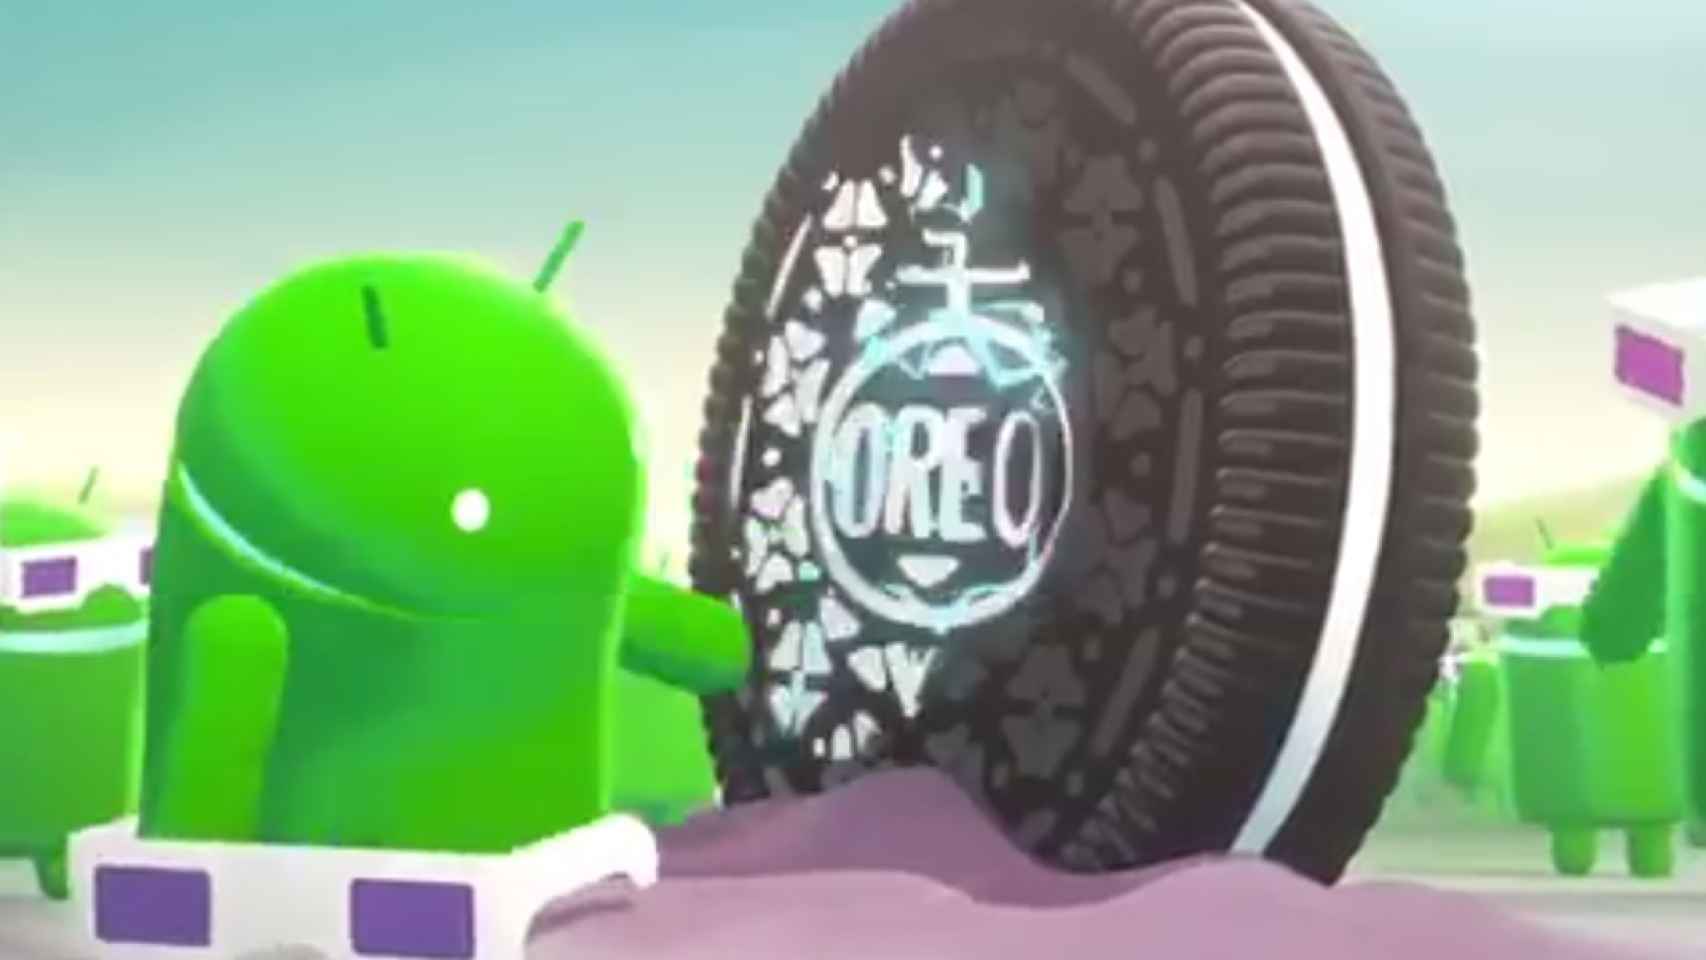 Android Oreo, la galleta robot que simboliza dos compañías.